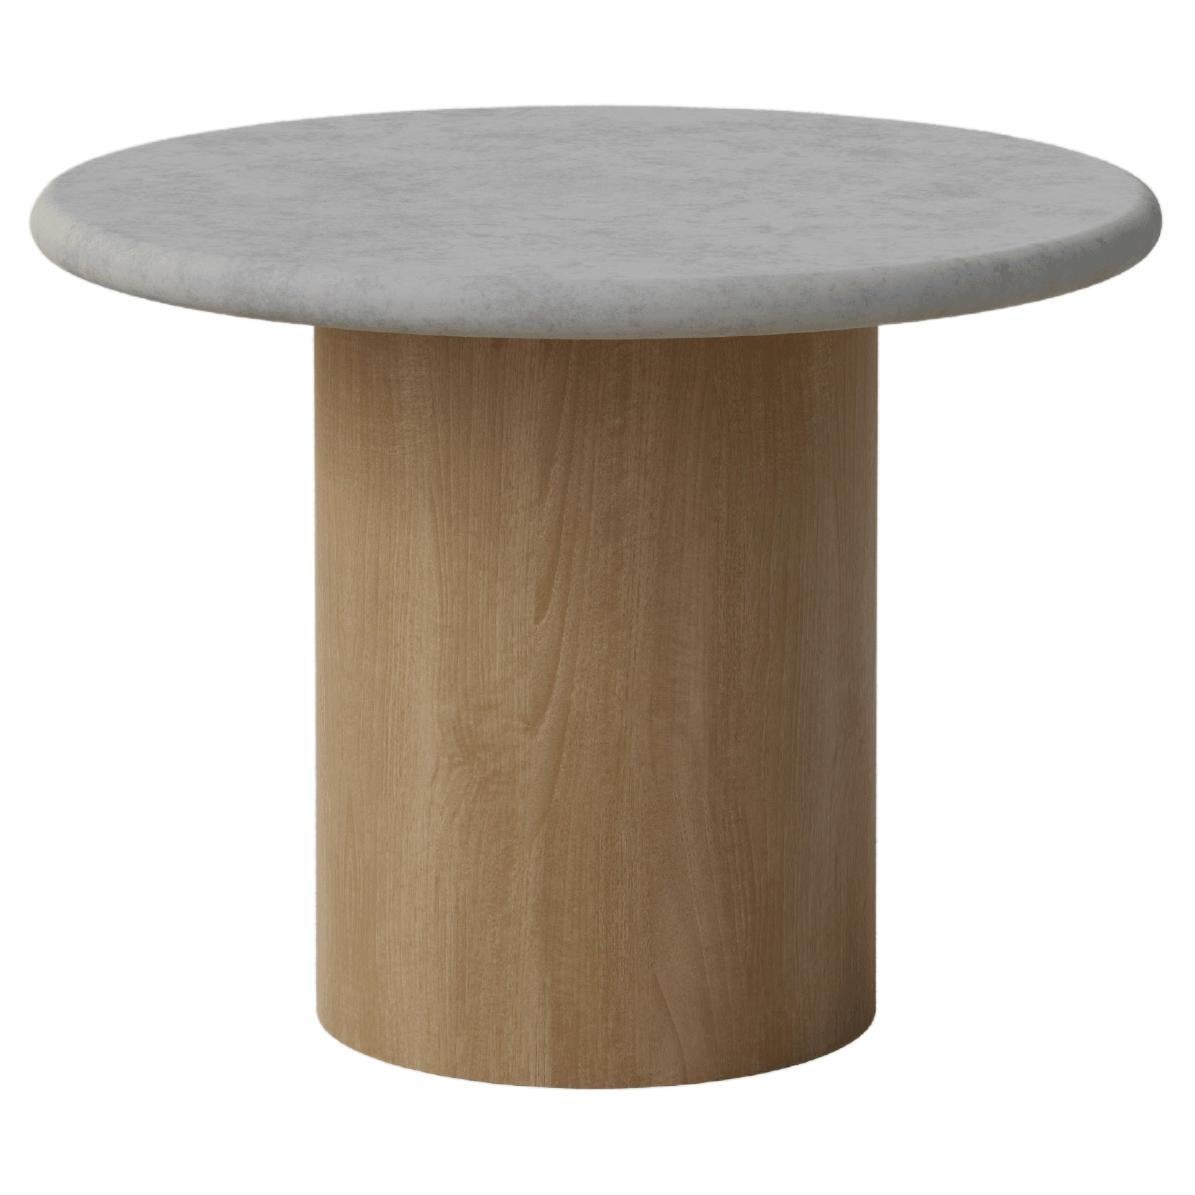 Raindrop Coffee Table, 500, Microcrete / Oak For Sale